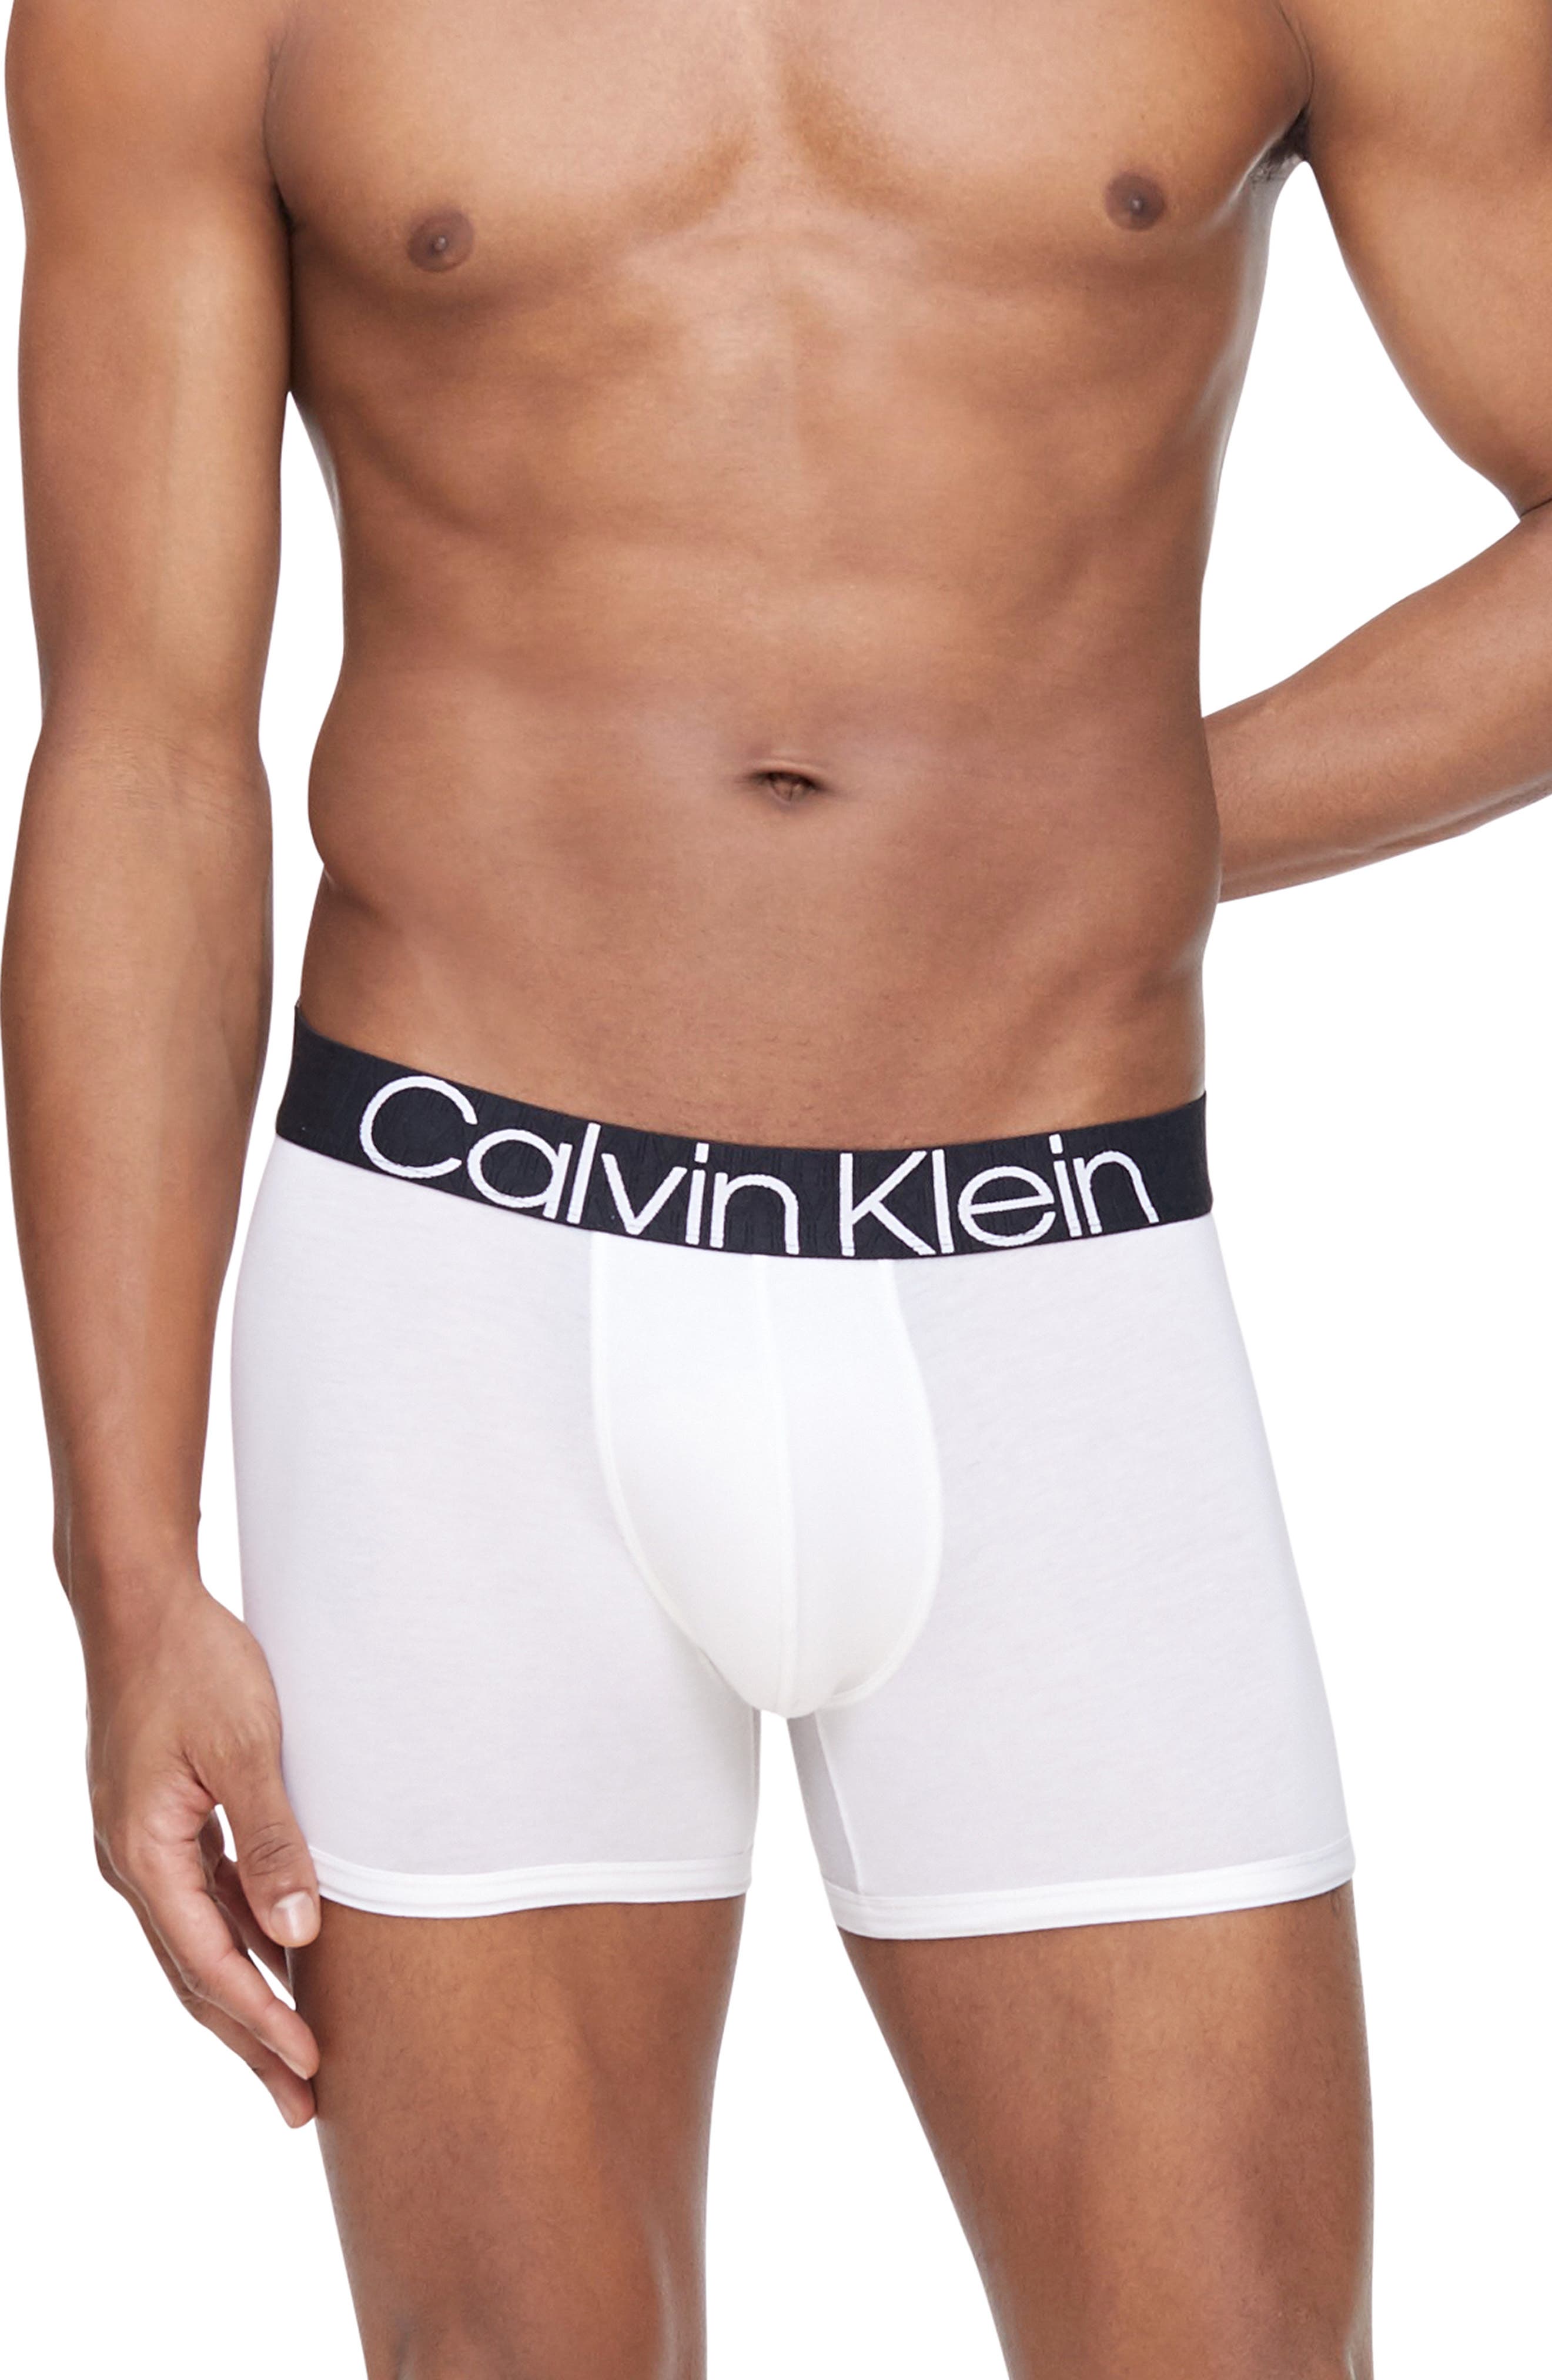 UPC 790812539439 product image for Men's Calvin Klein Eco Cotton Blend Boxer Briefs, Size X-Large - White | upcitemdb.com